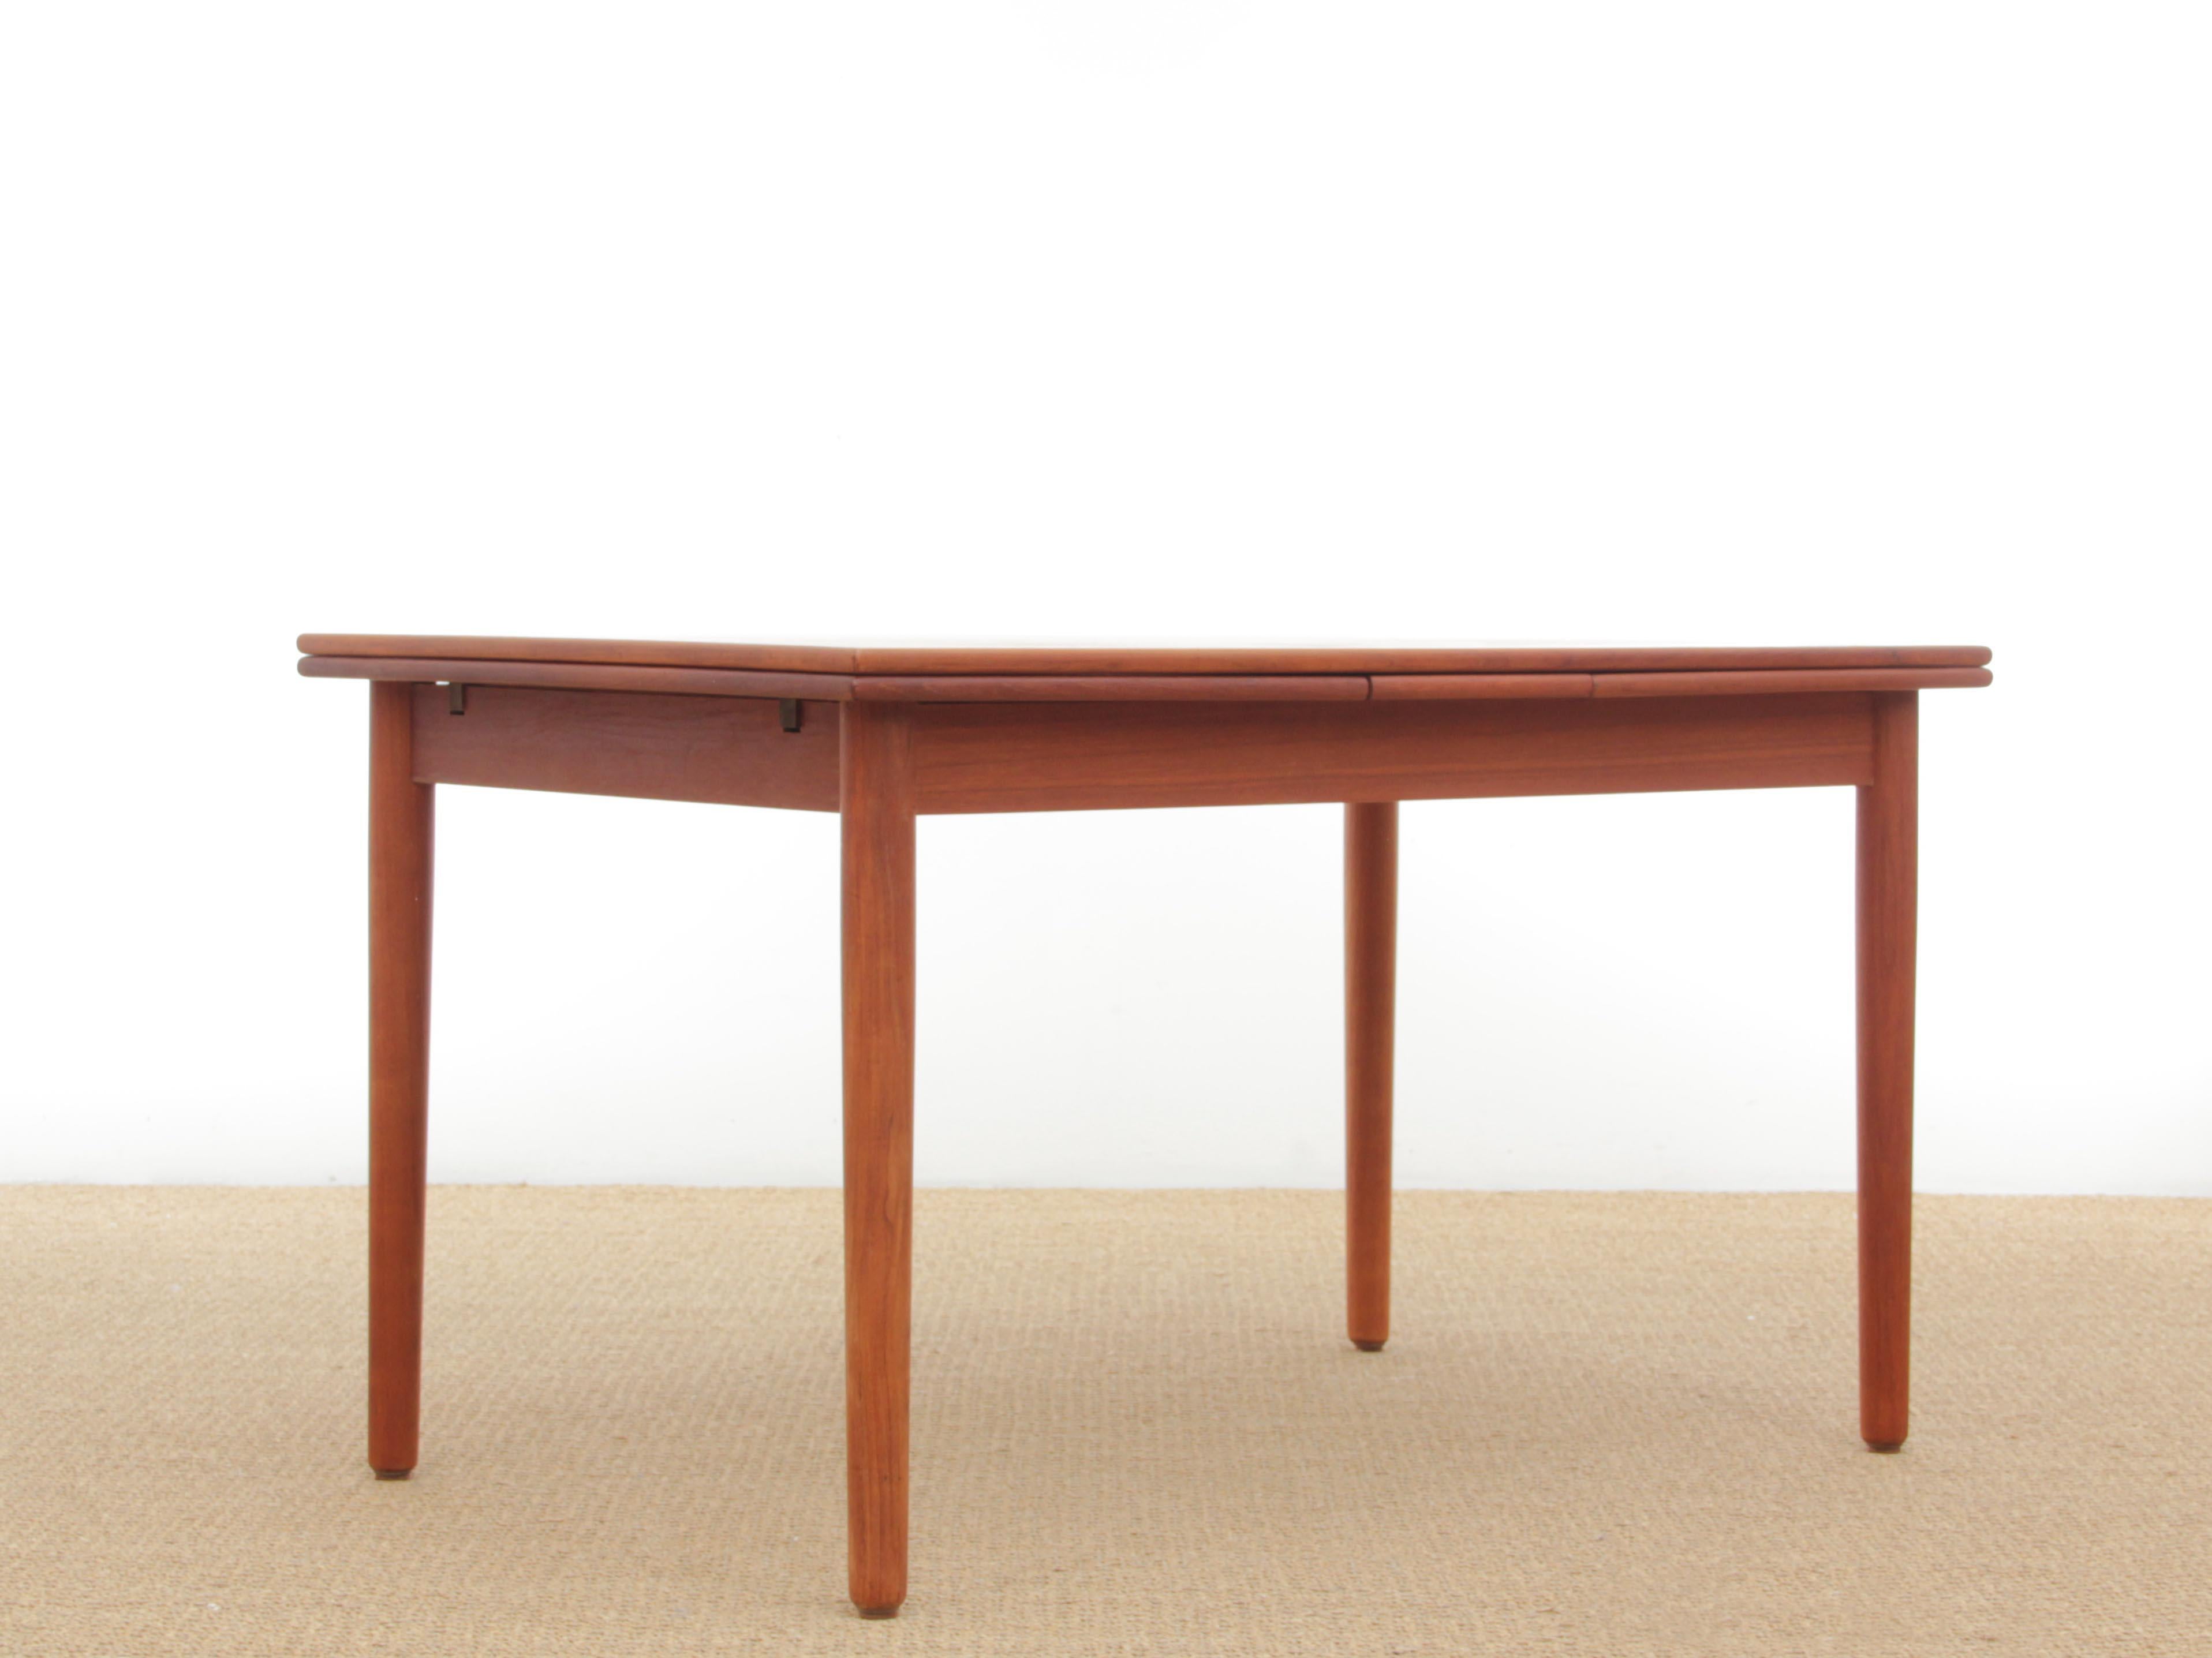 Mid-Century Modern Scandinavian dining table in teak 4/8 seats. 2 extra leaves

Measures: W 125/225 cm, 
D 80.5 cm, H 72 cm.